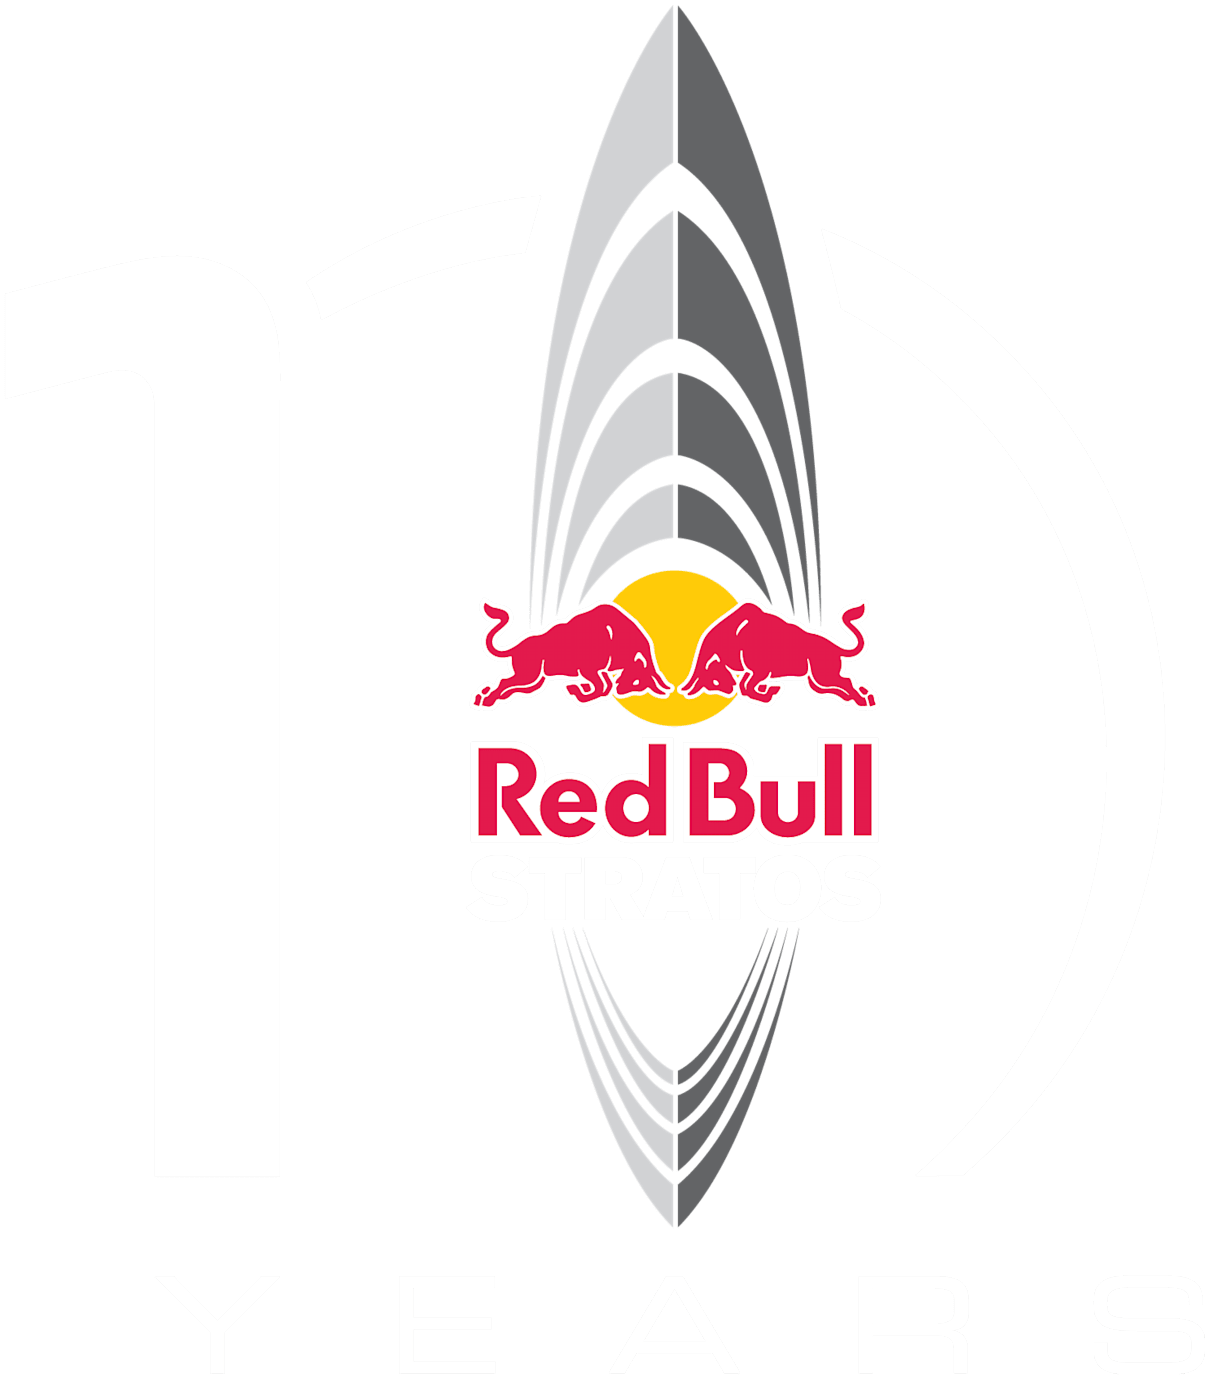 Stratos - 10 years